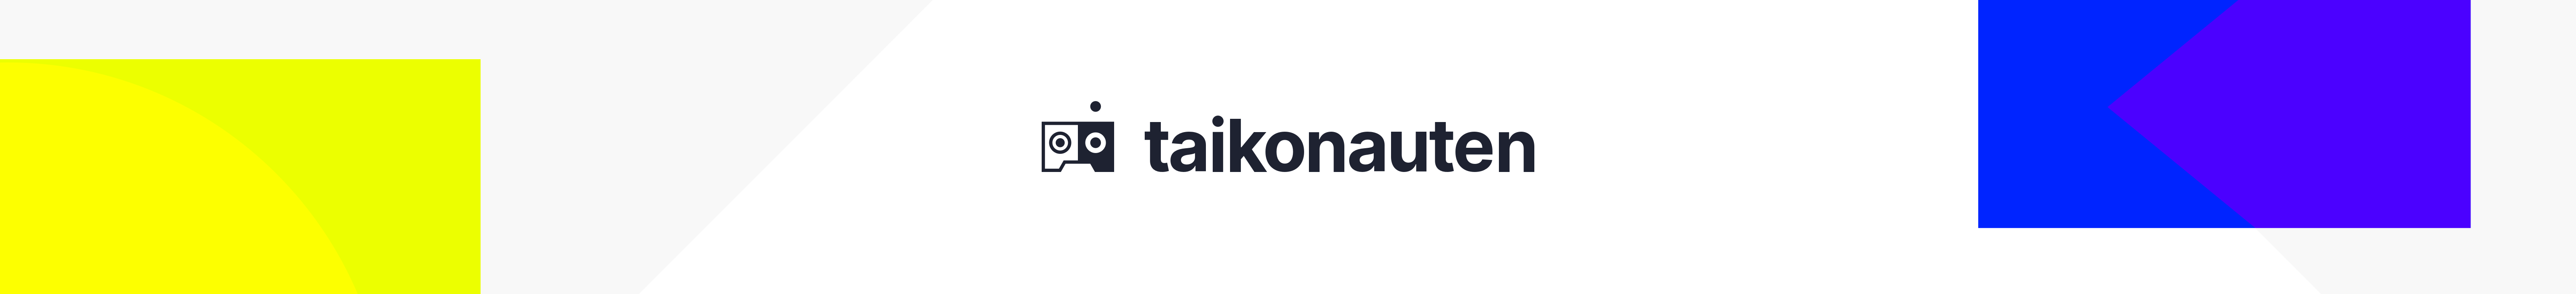 Taikonauten GmbH & Co. KG's profile banner